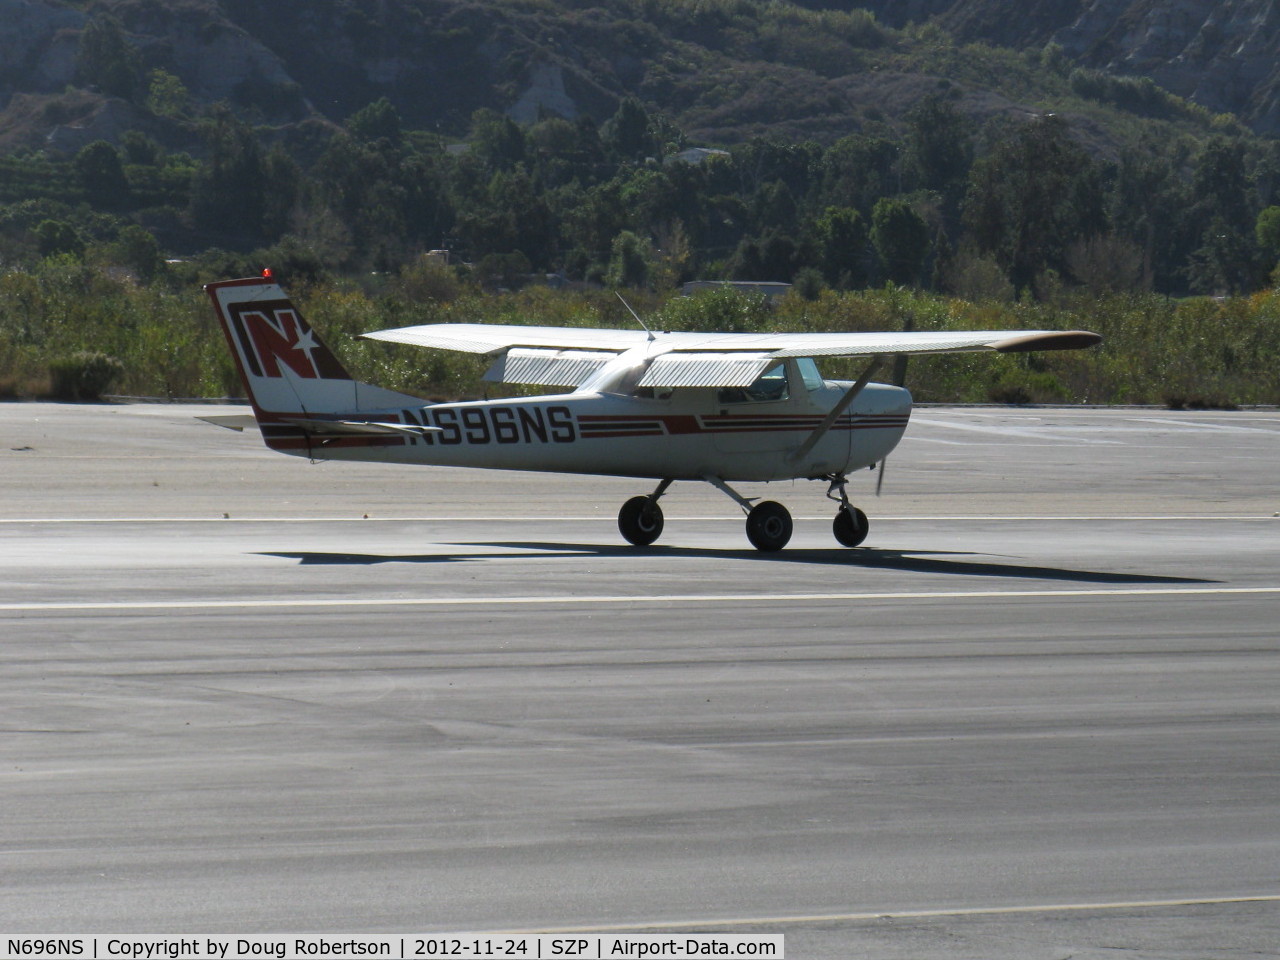 N696NS, 1968 Cessna 150H C/N 15068871, 1968 Cessna 150H 'North Star', Continental O-200 100 Hp, landing roll Rwy 22